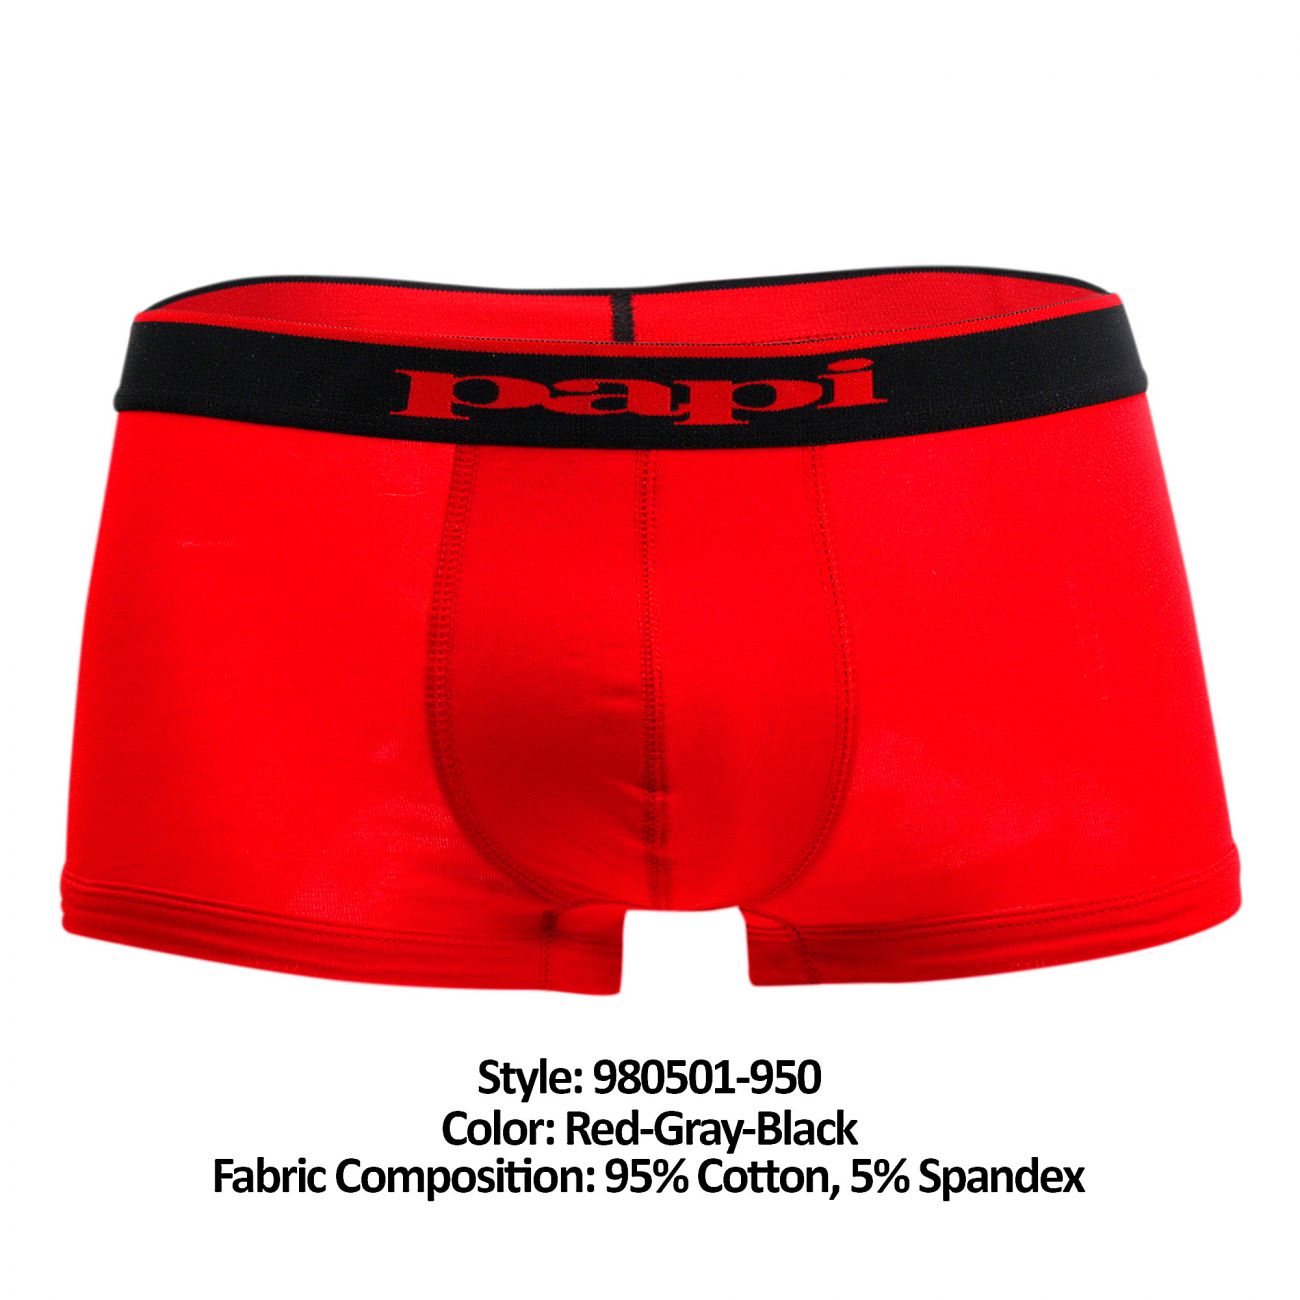 Papi 980501-950 3PK Cotton Stretch Brazilian Solids Red-Gray-Black